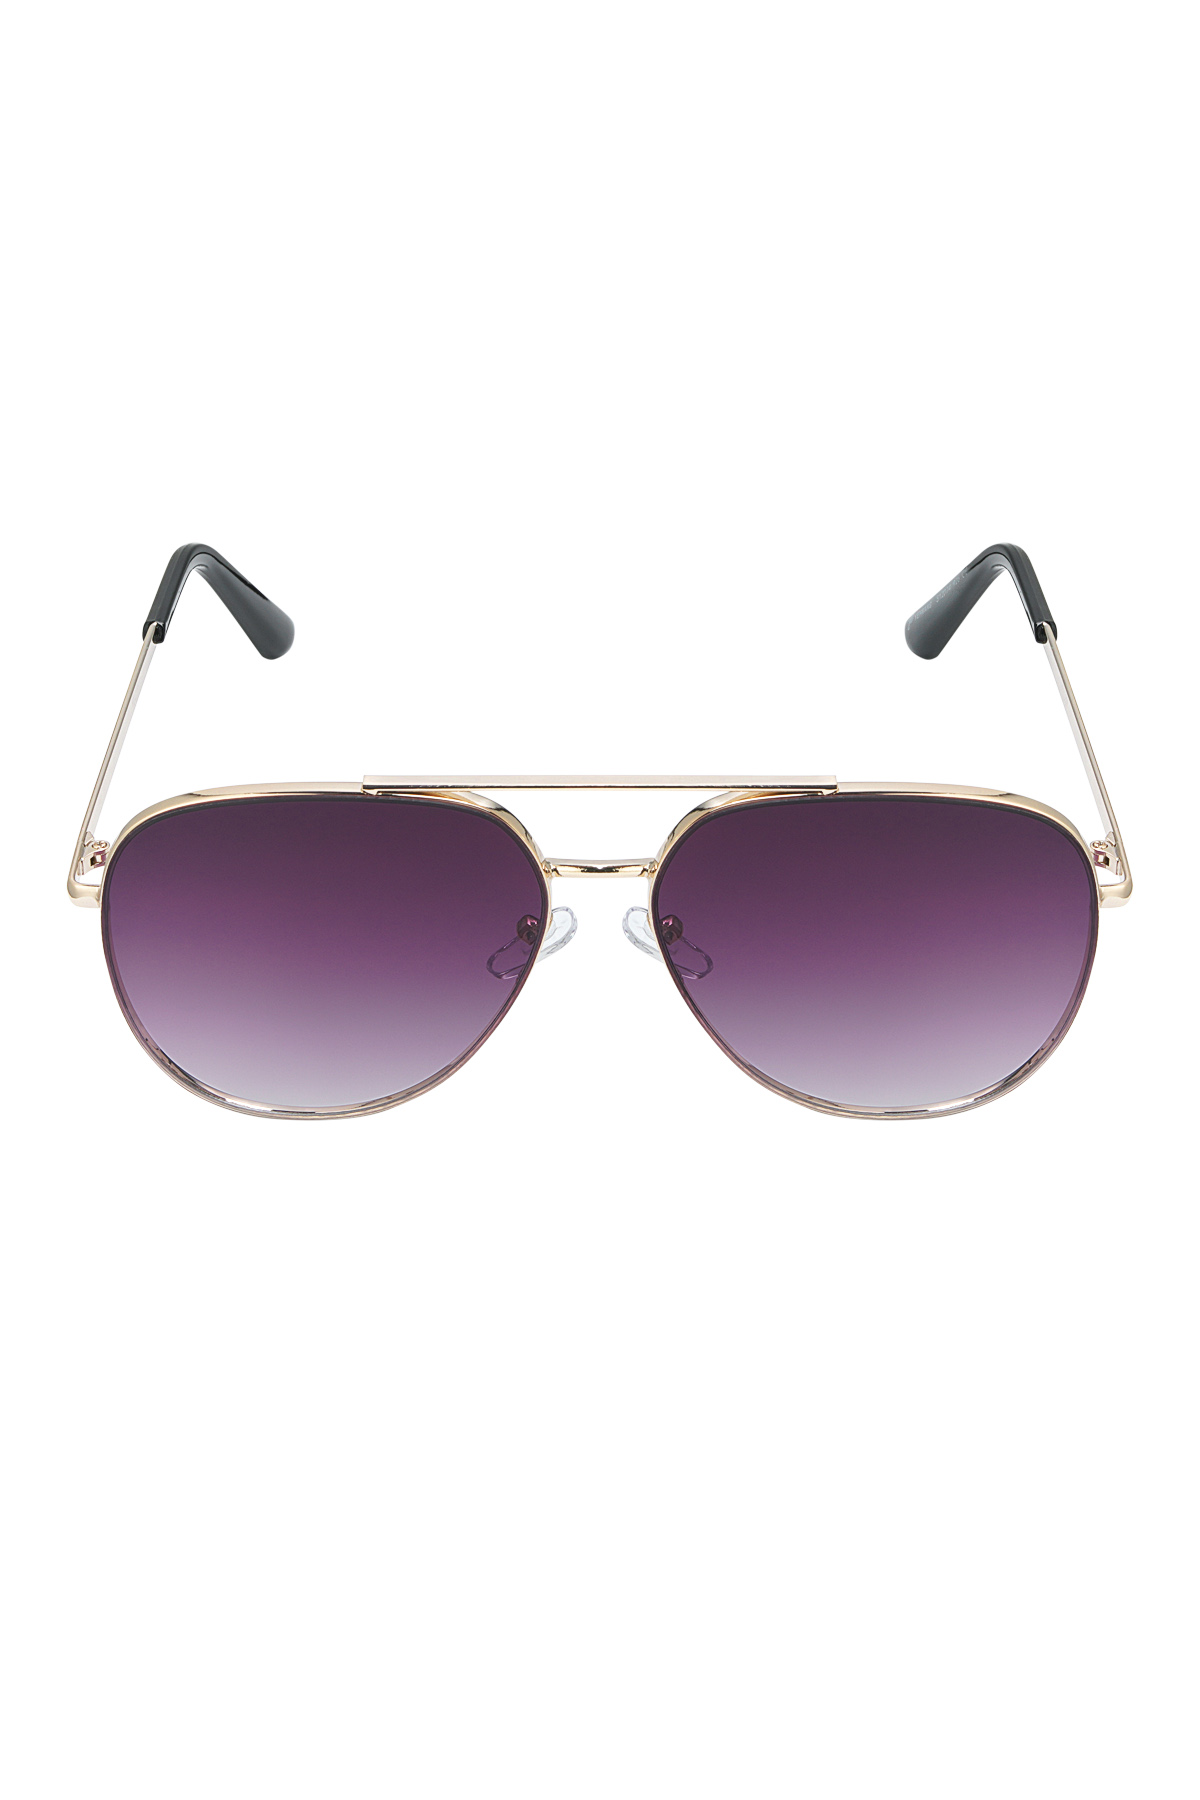 Pilot sunglasses - dark purple Picture5